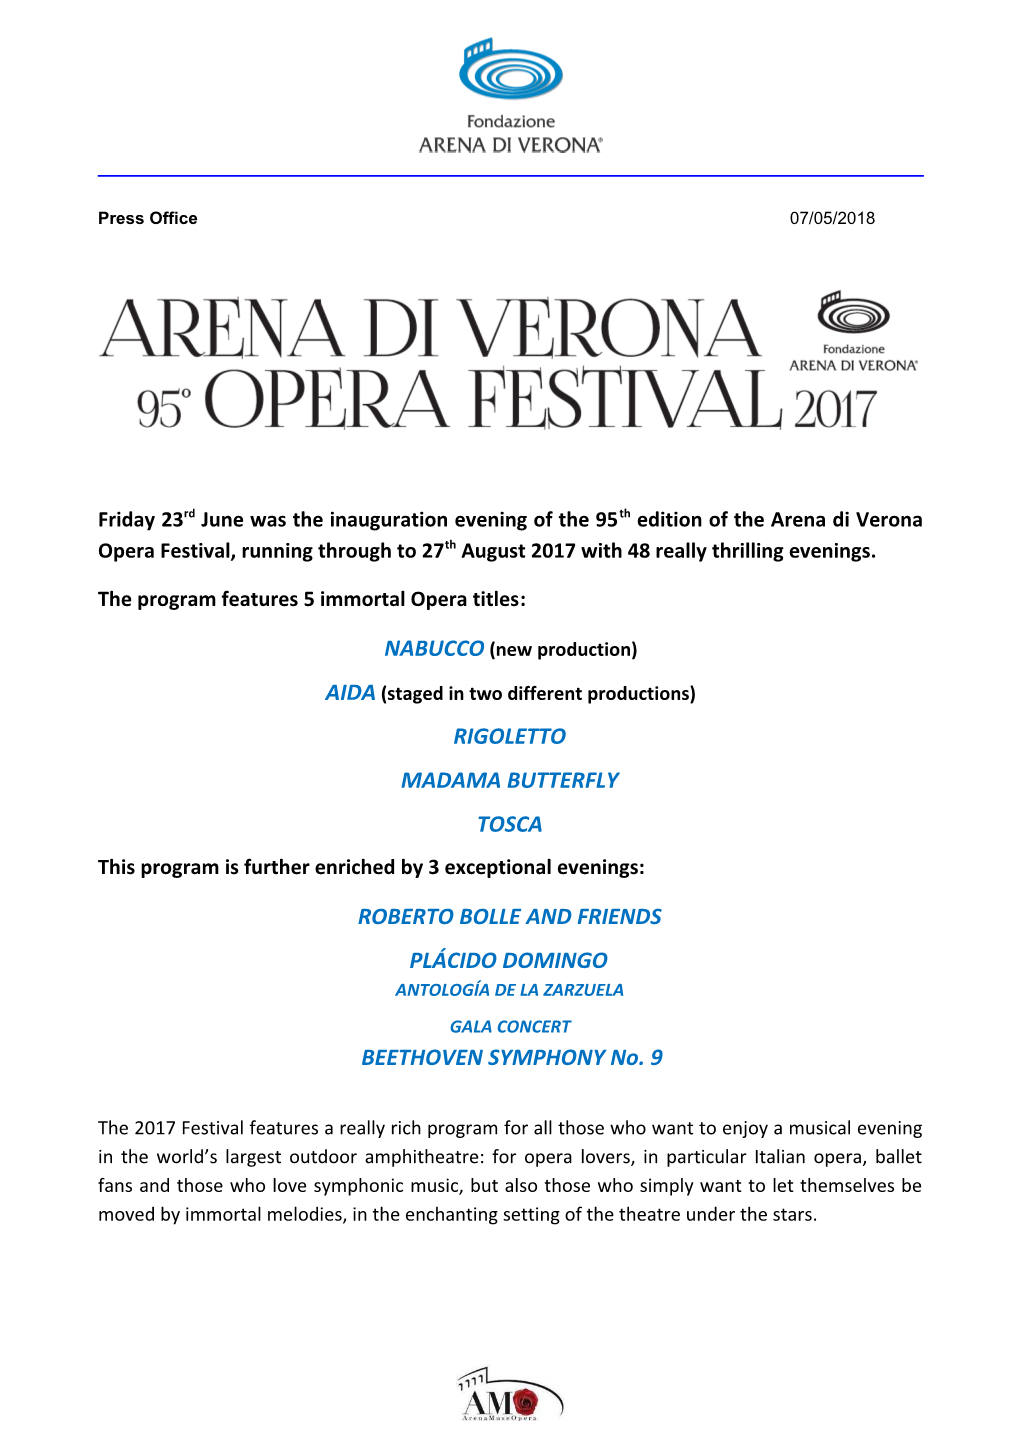 The Program Features 5 Immortal Opera Titles